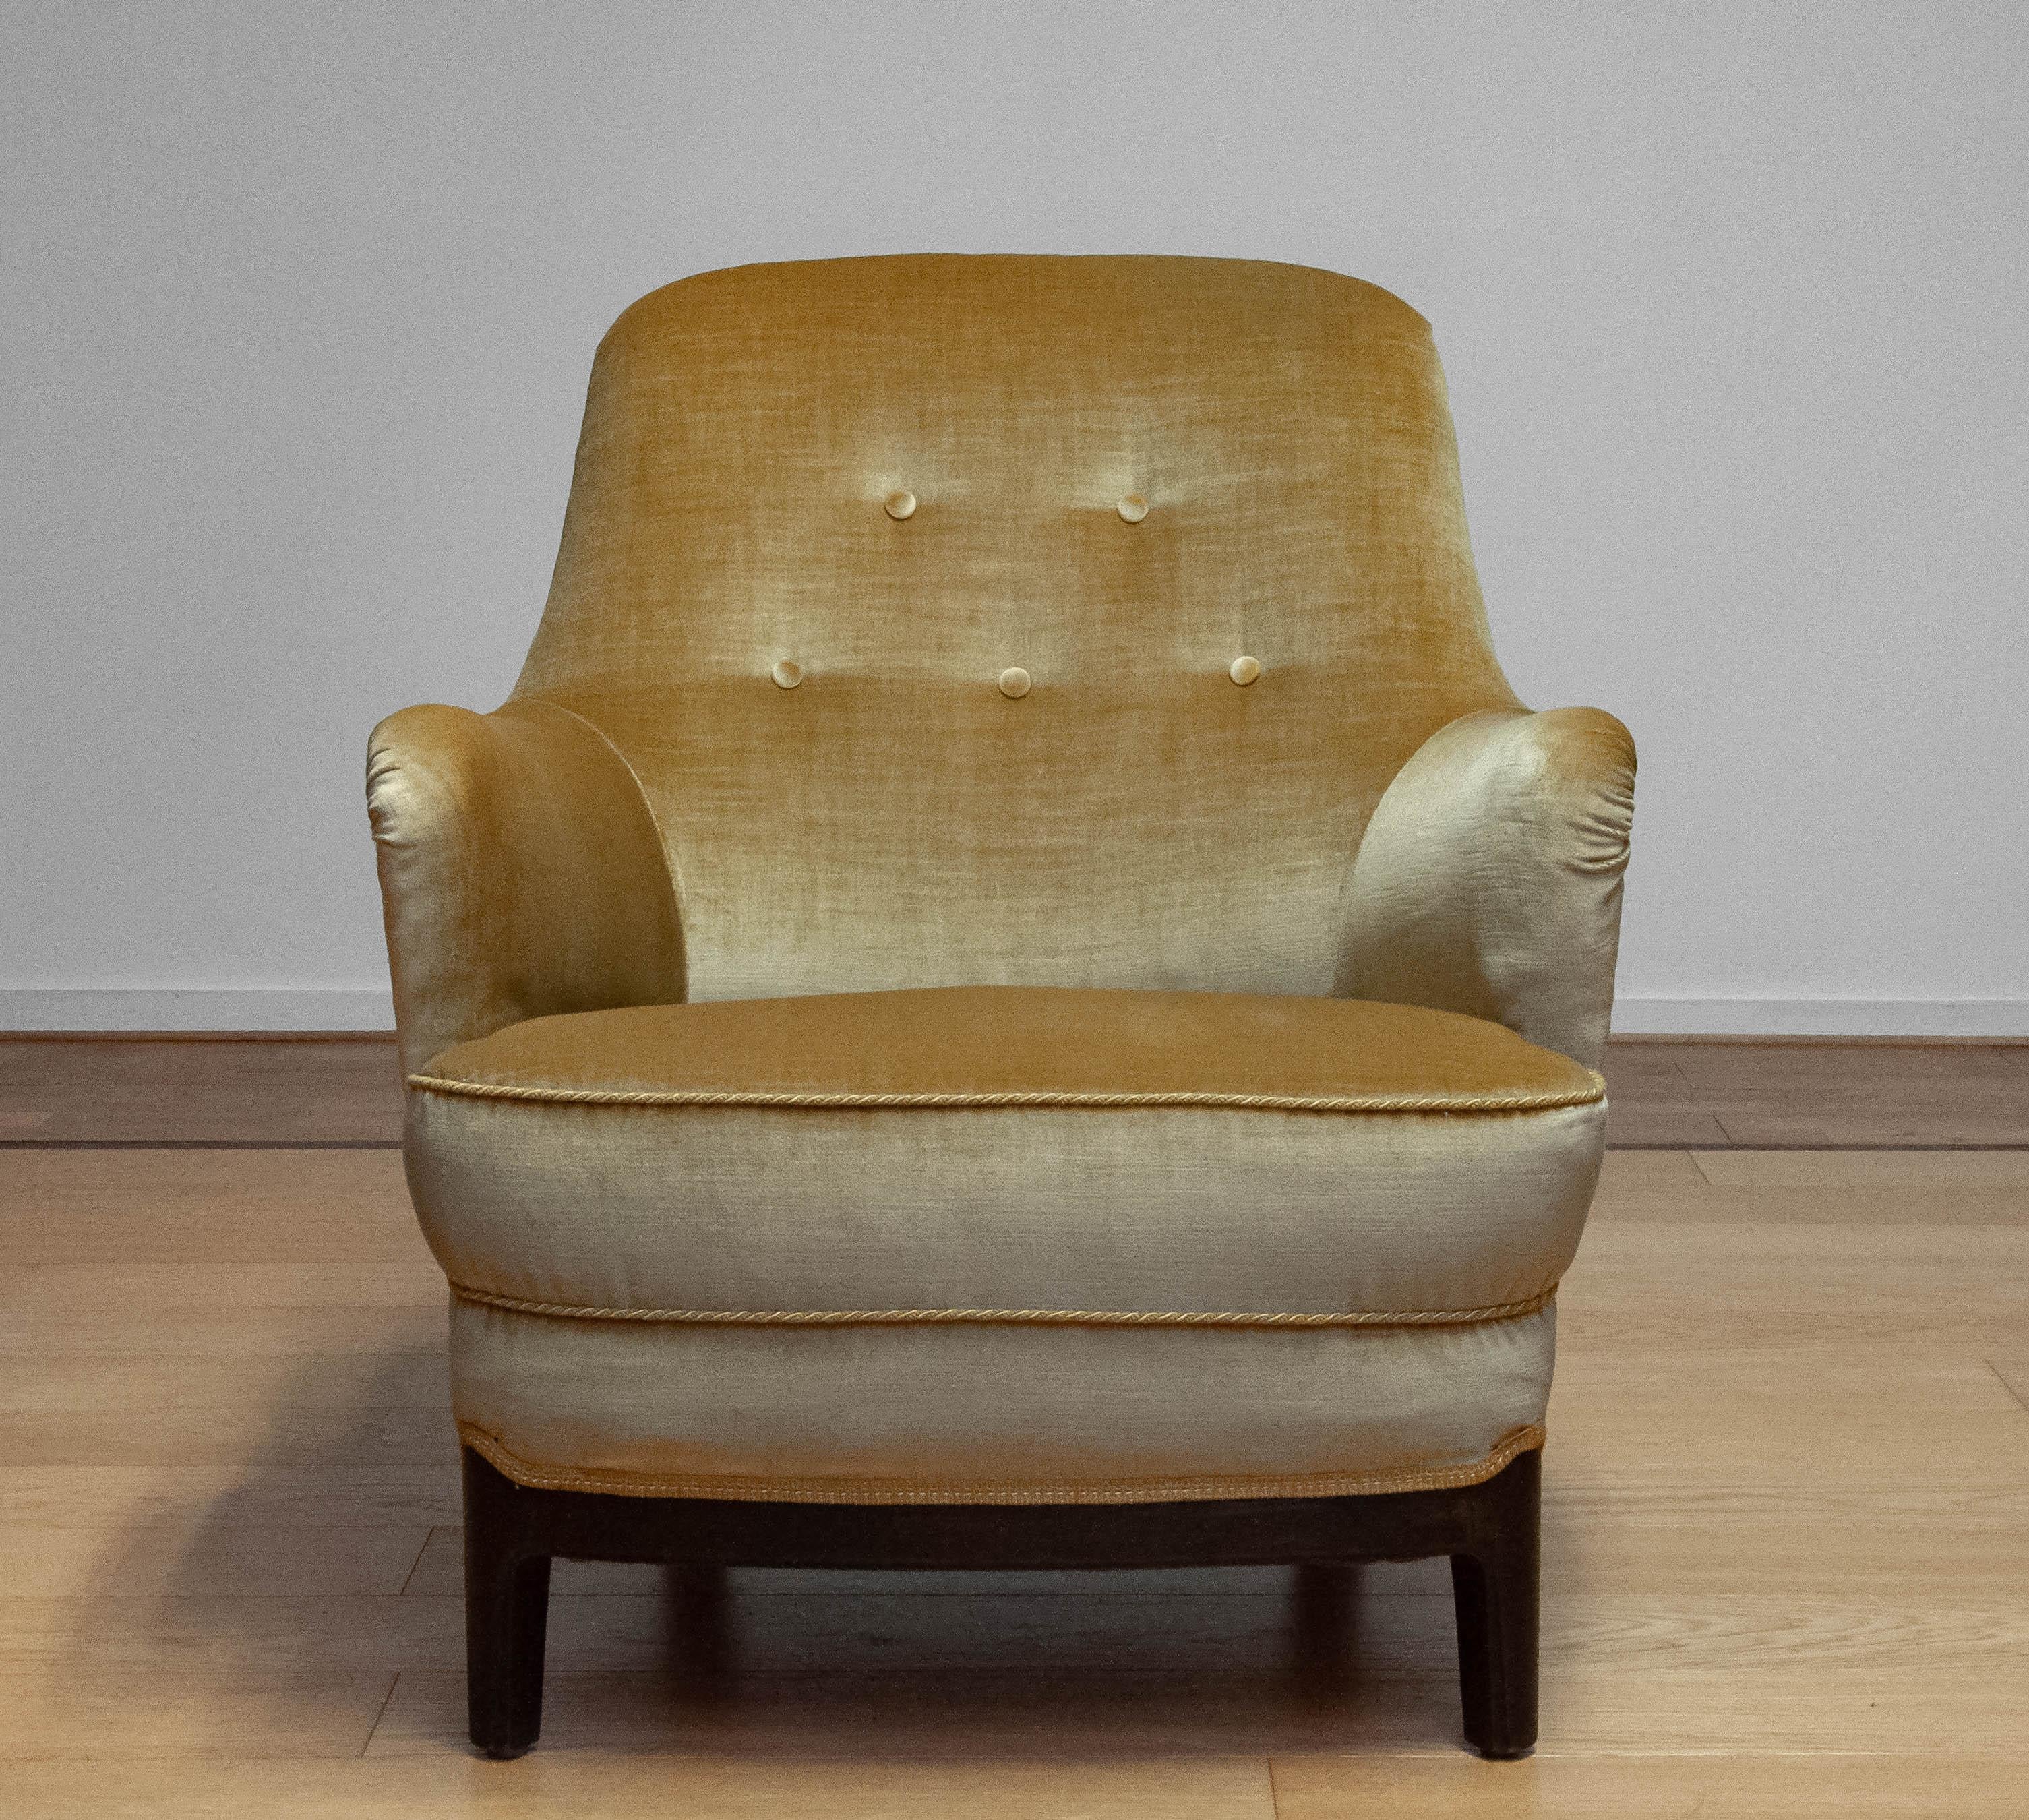 1940s Gold Colored Velvet Upholstered Lounge Chair By Carl Malmsten Sweden For Sale 1